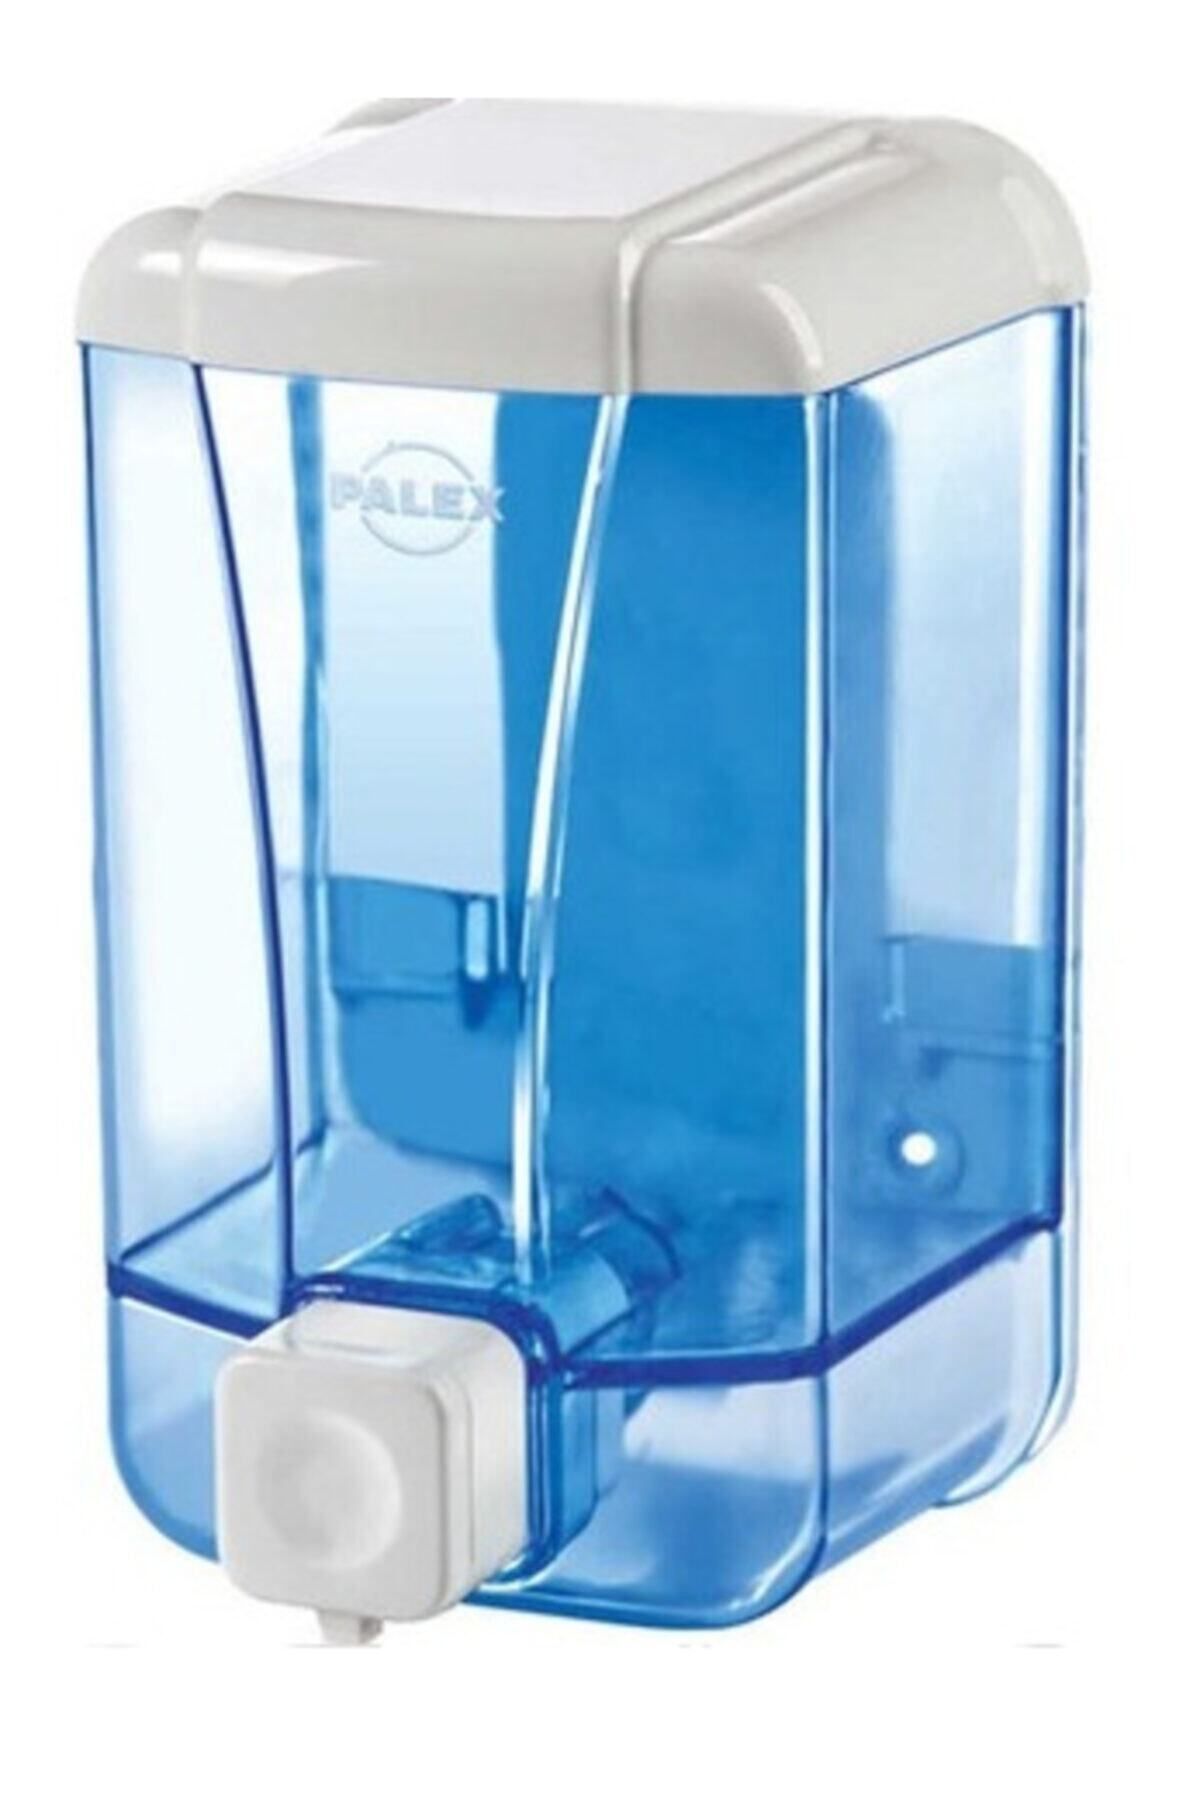 Palex Sıvı Sabunluk Sabun Dispenseri Duvara Monte Şeffaf Mavi